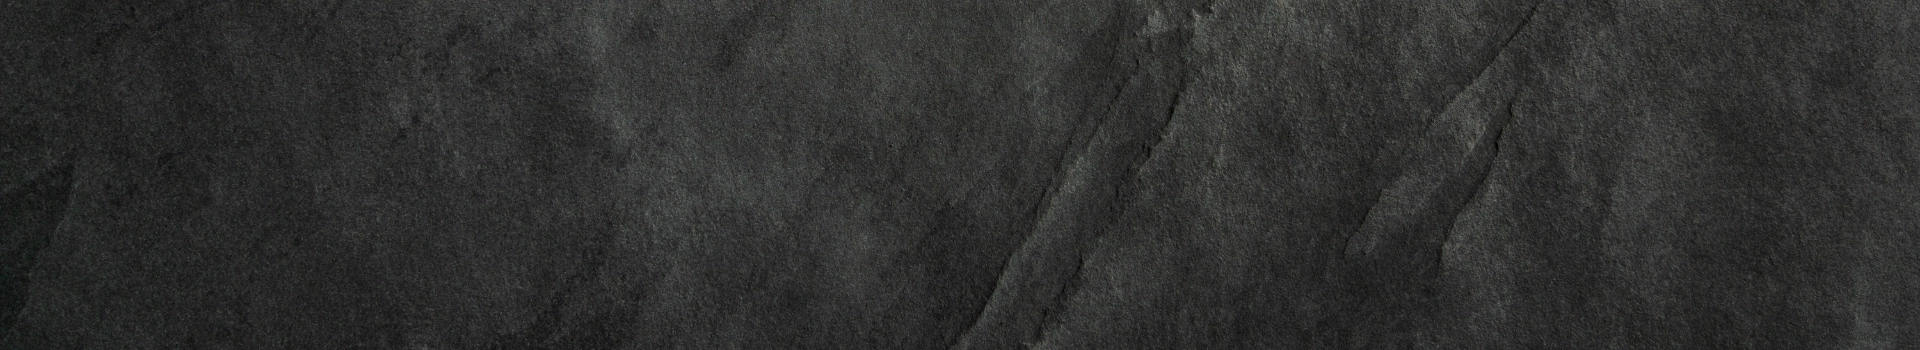 banner - marmur czarny deseń